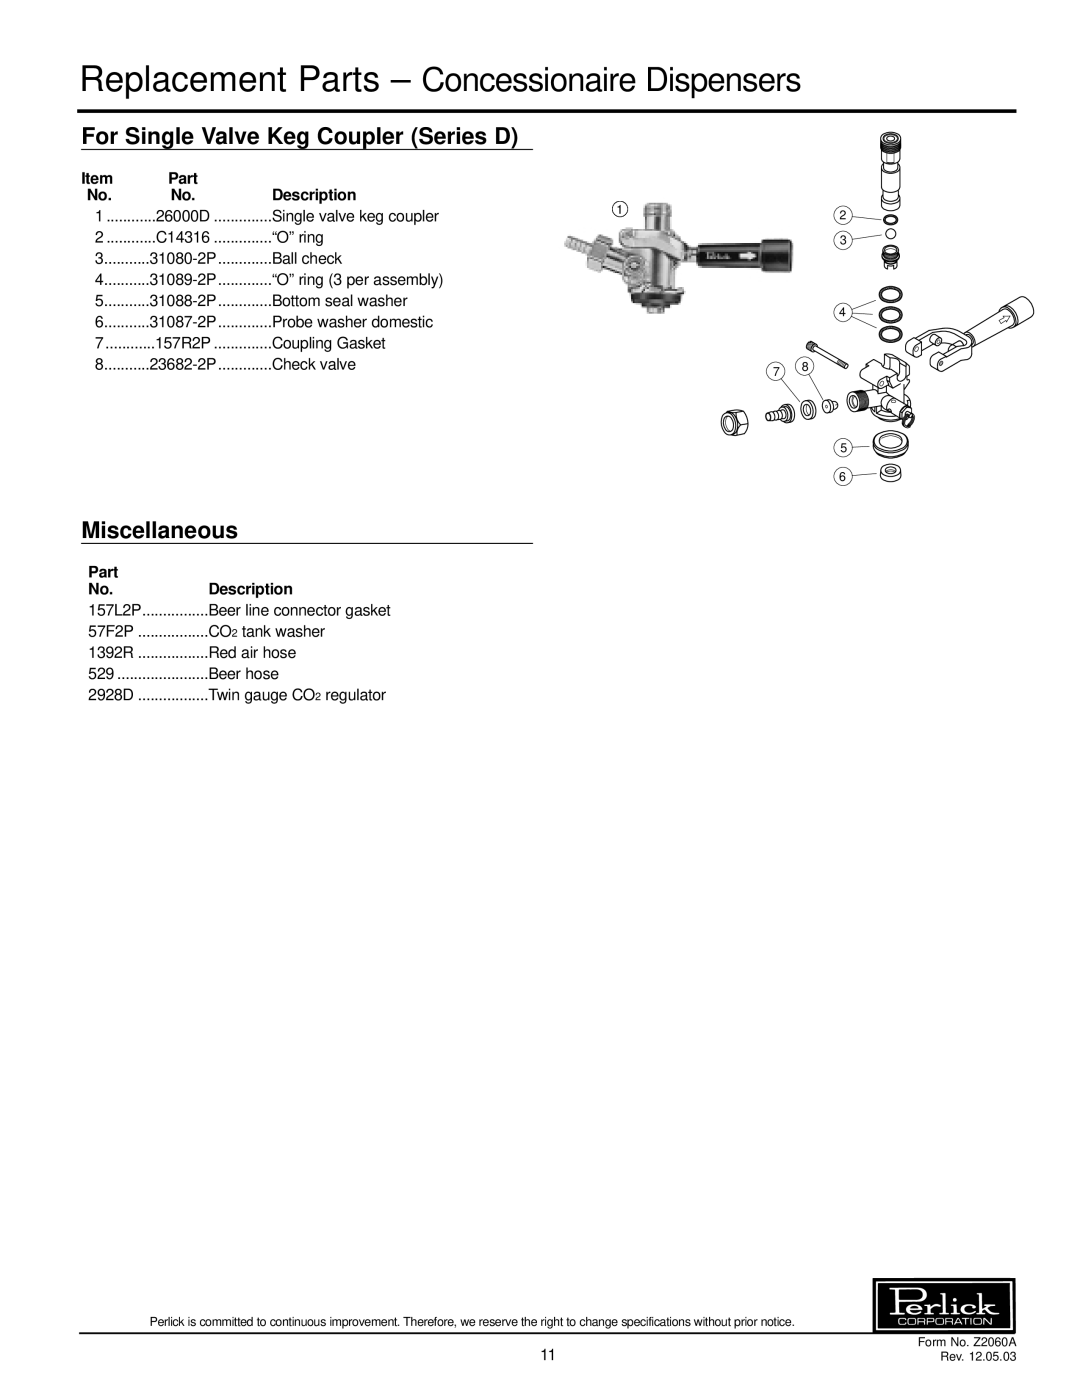 Perlick DC Series For Single Valve Keg Coupler Series D, Miscellaneous, Replacement Parts - Concessionaire Dispensers 